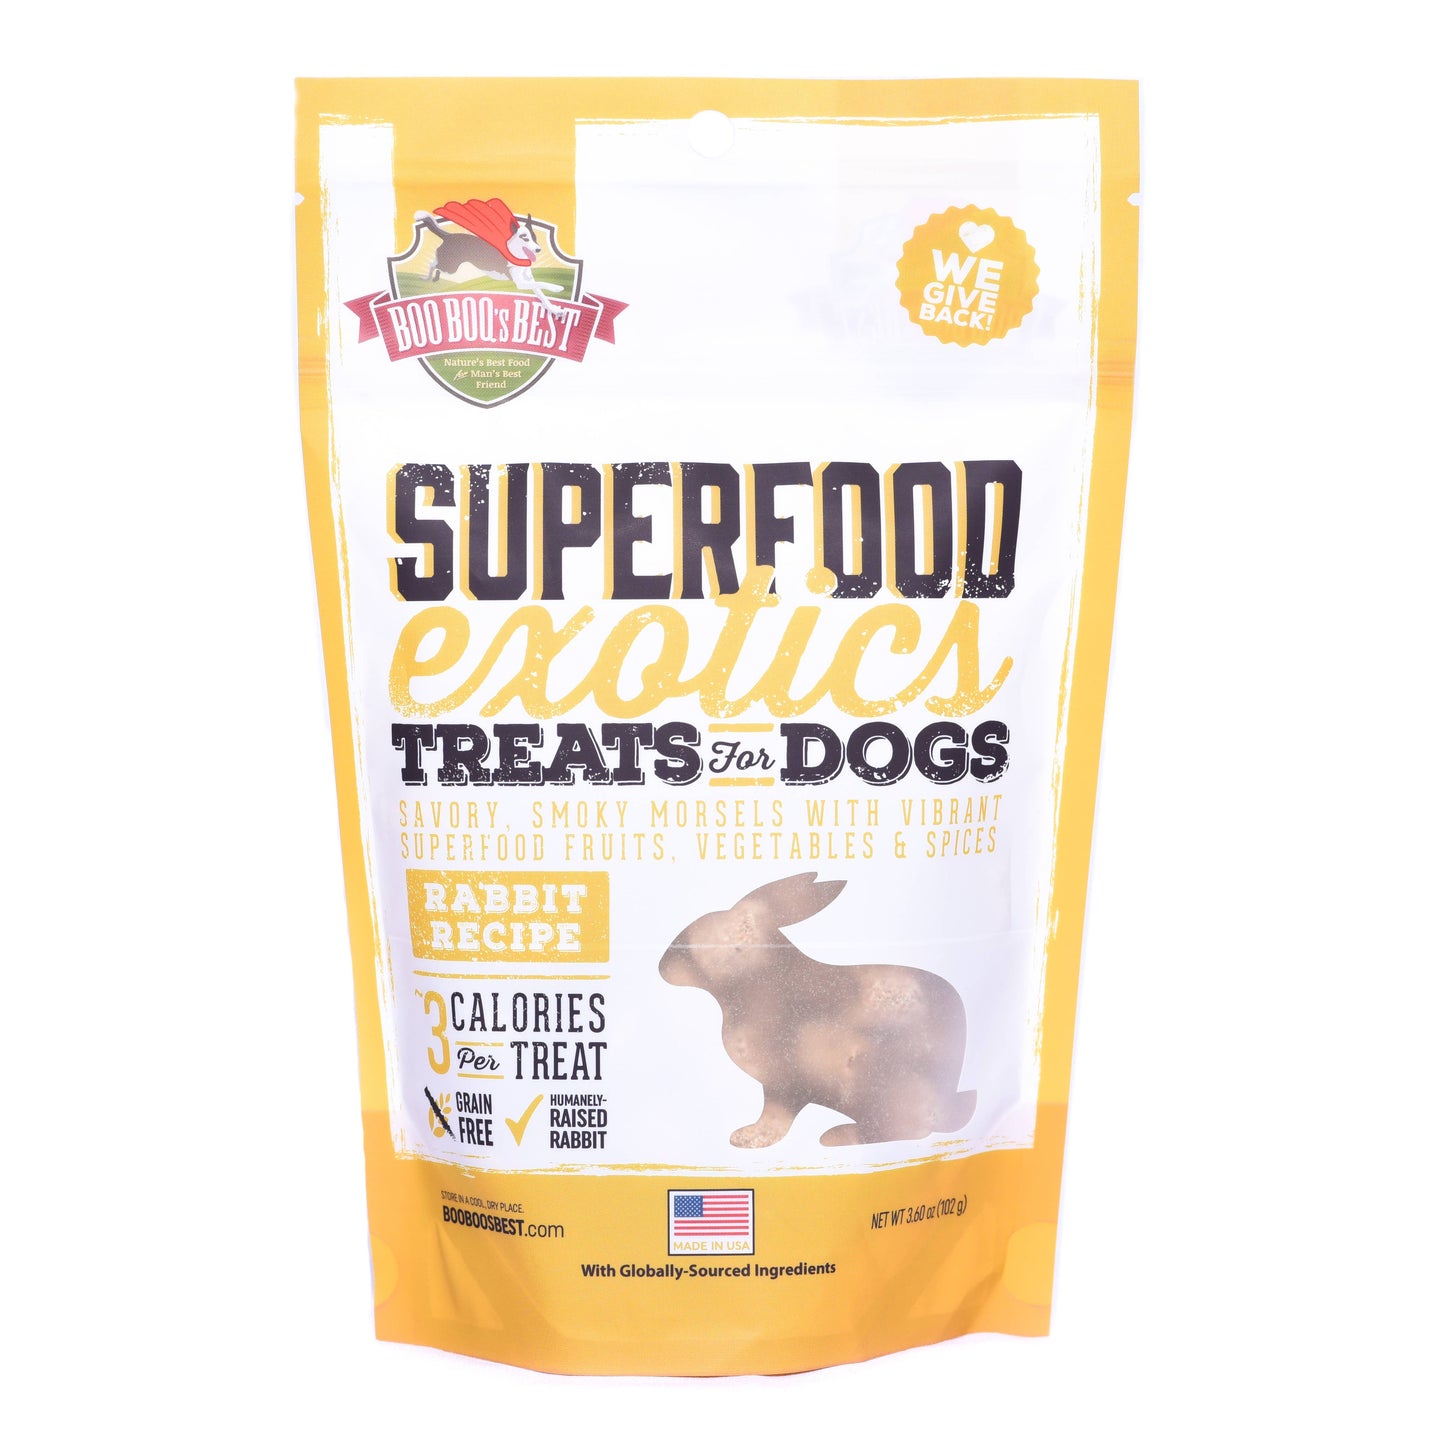 Boo Boo’s Best Superfood Exotics Treats Rabbit Image